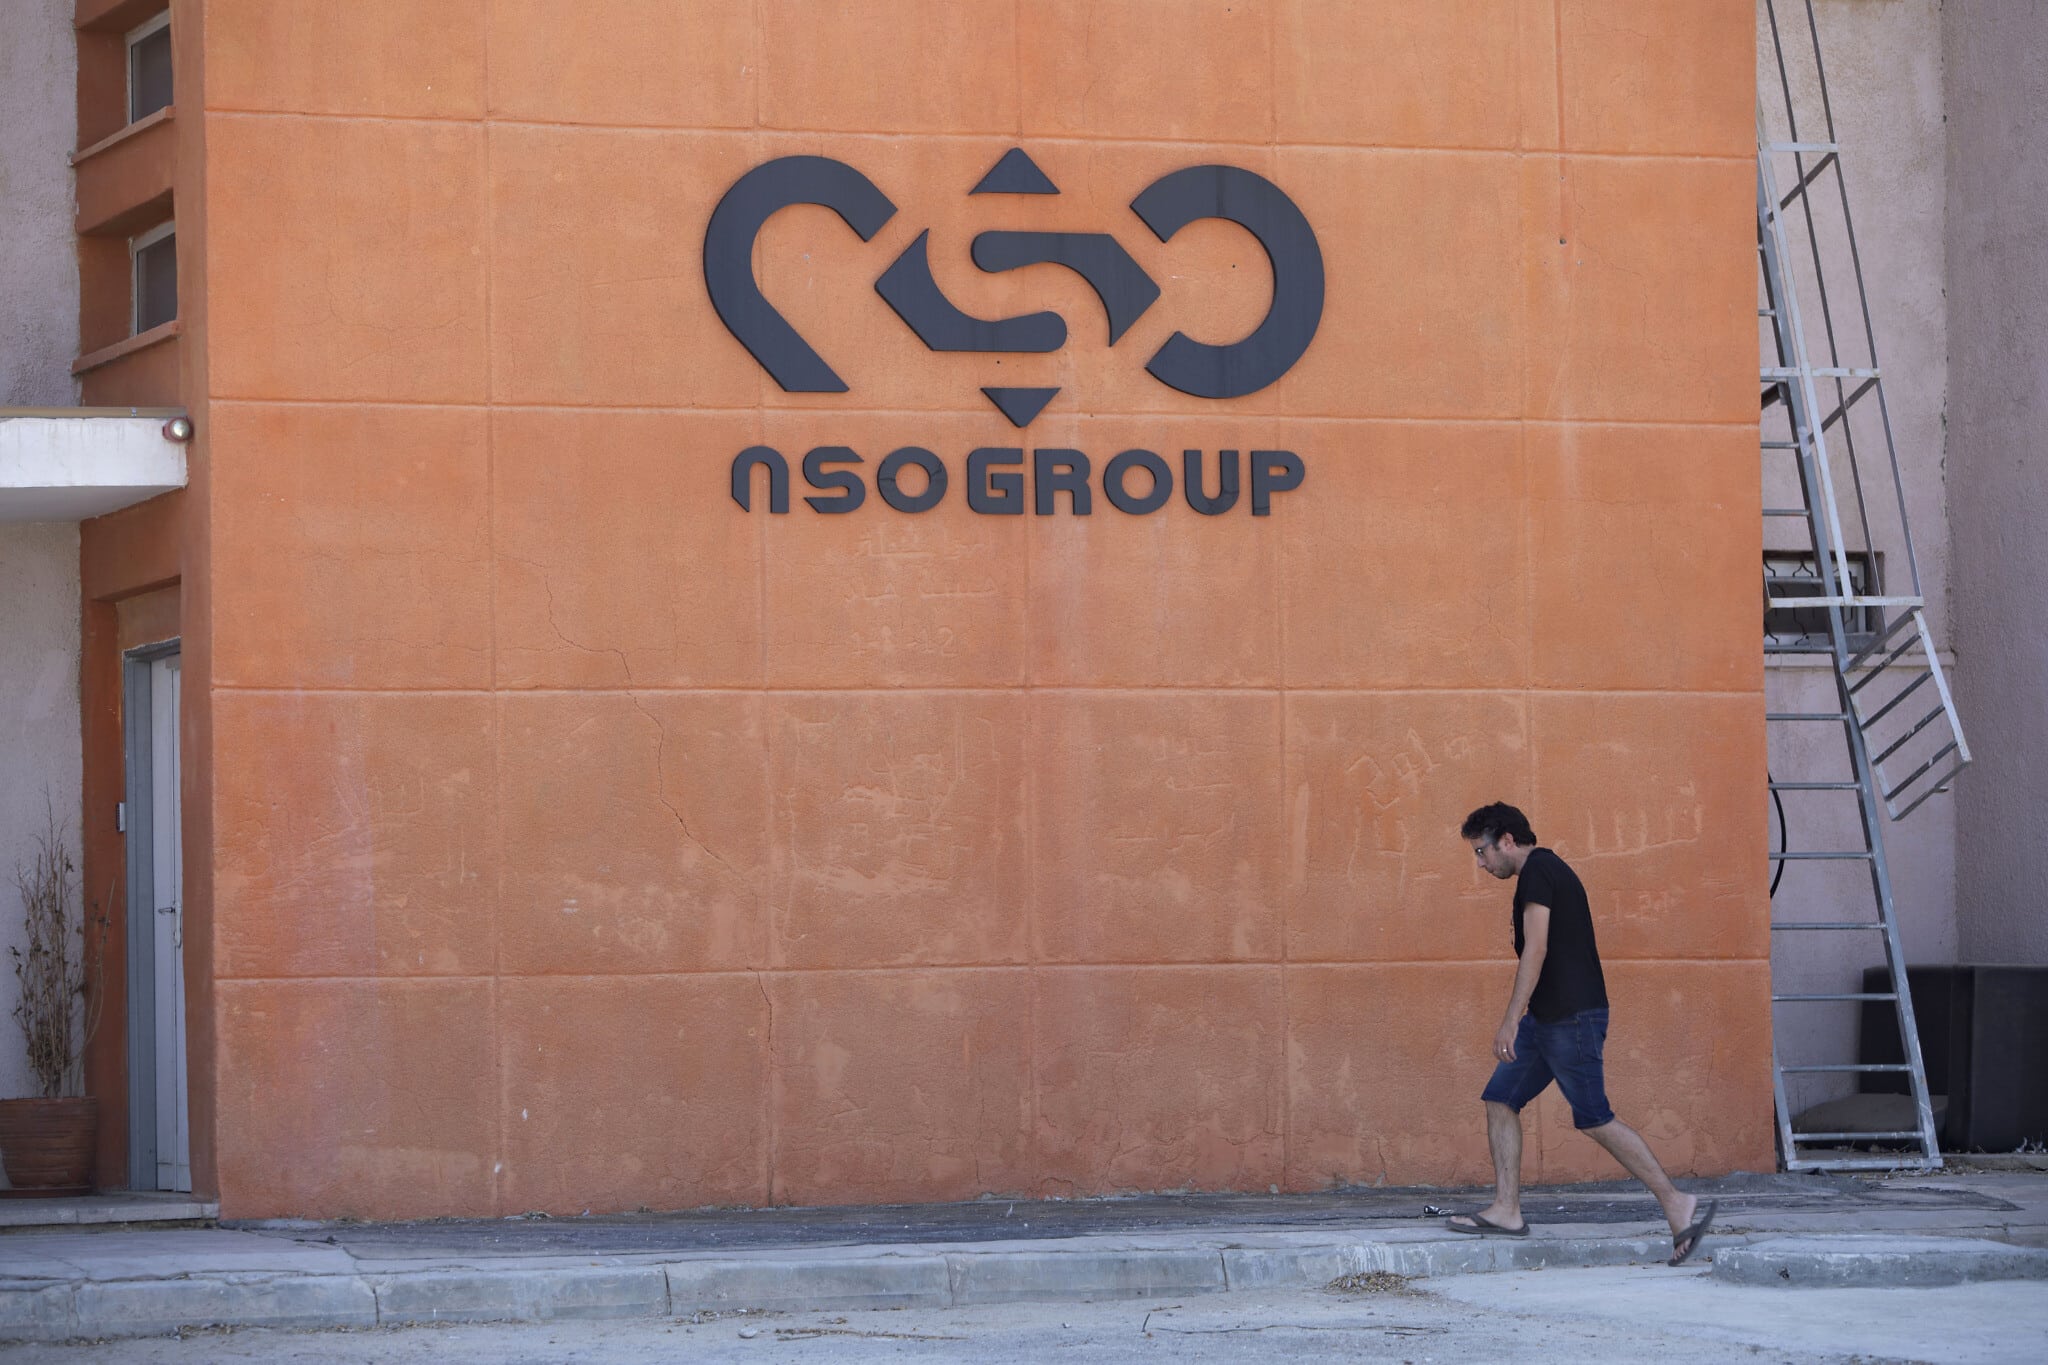 Israeli spyware company NSO Group CEO steps down